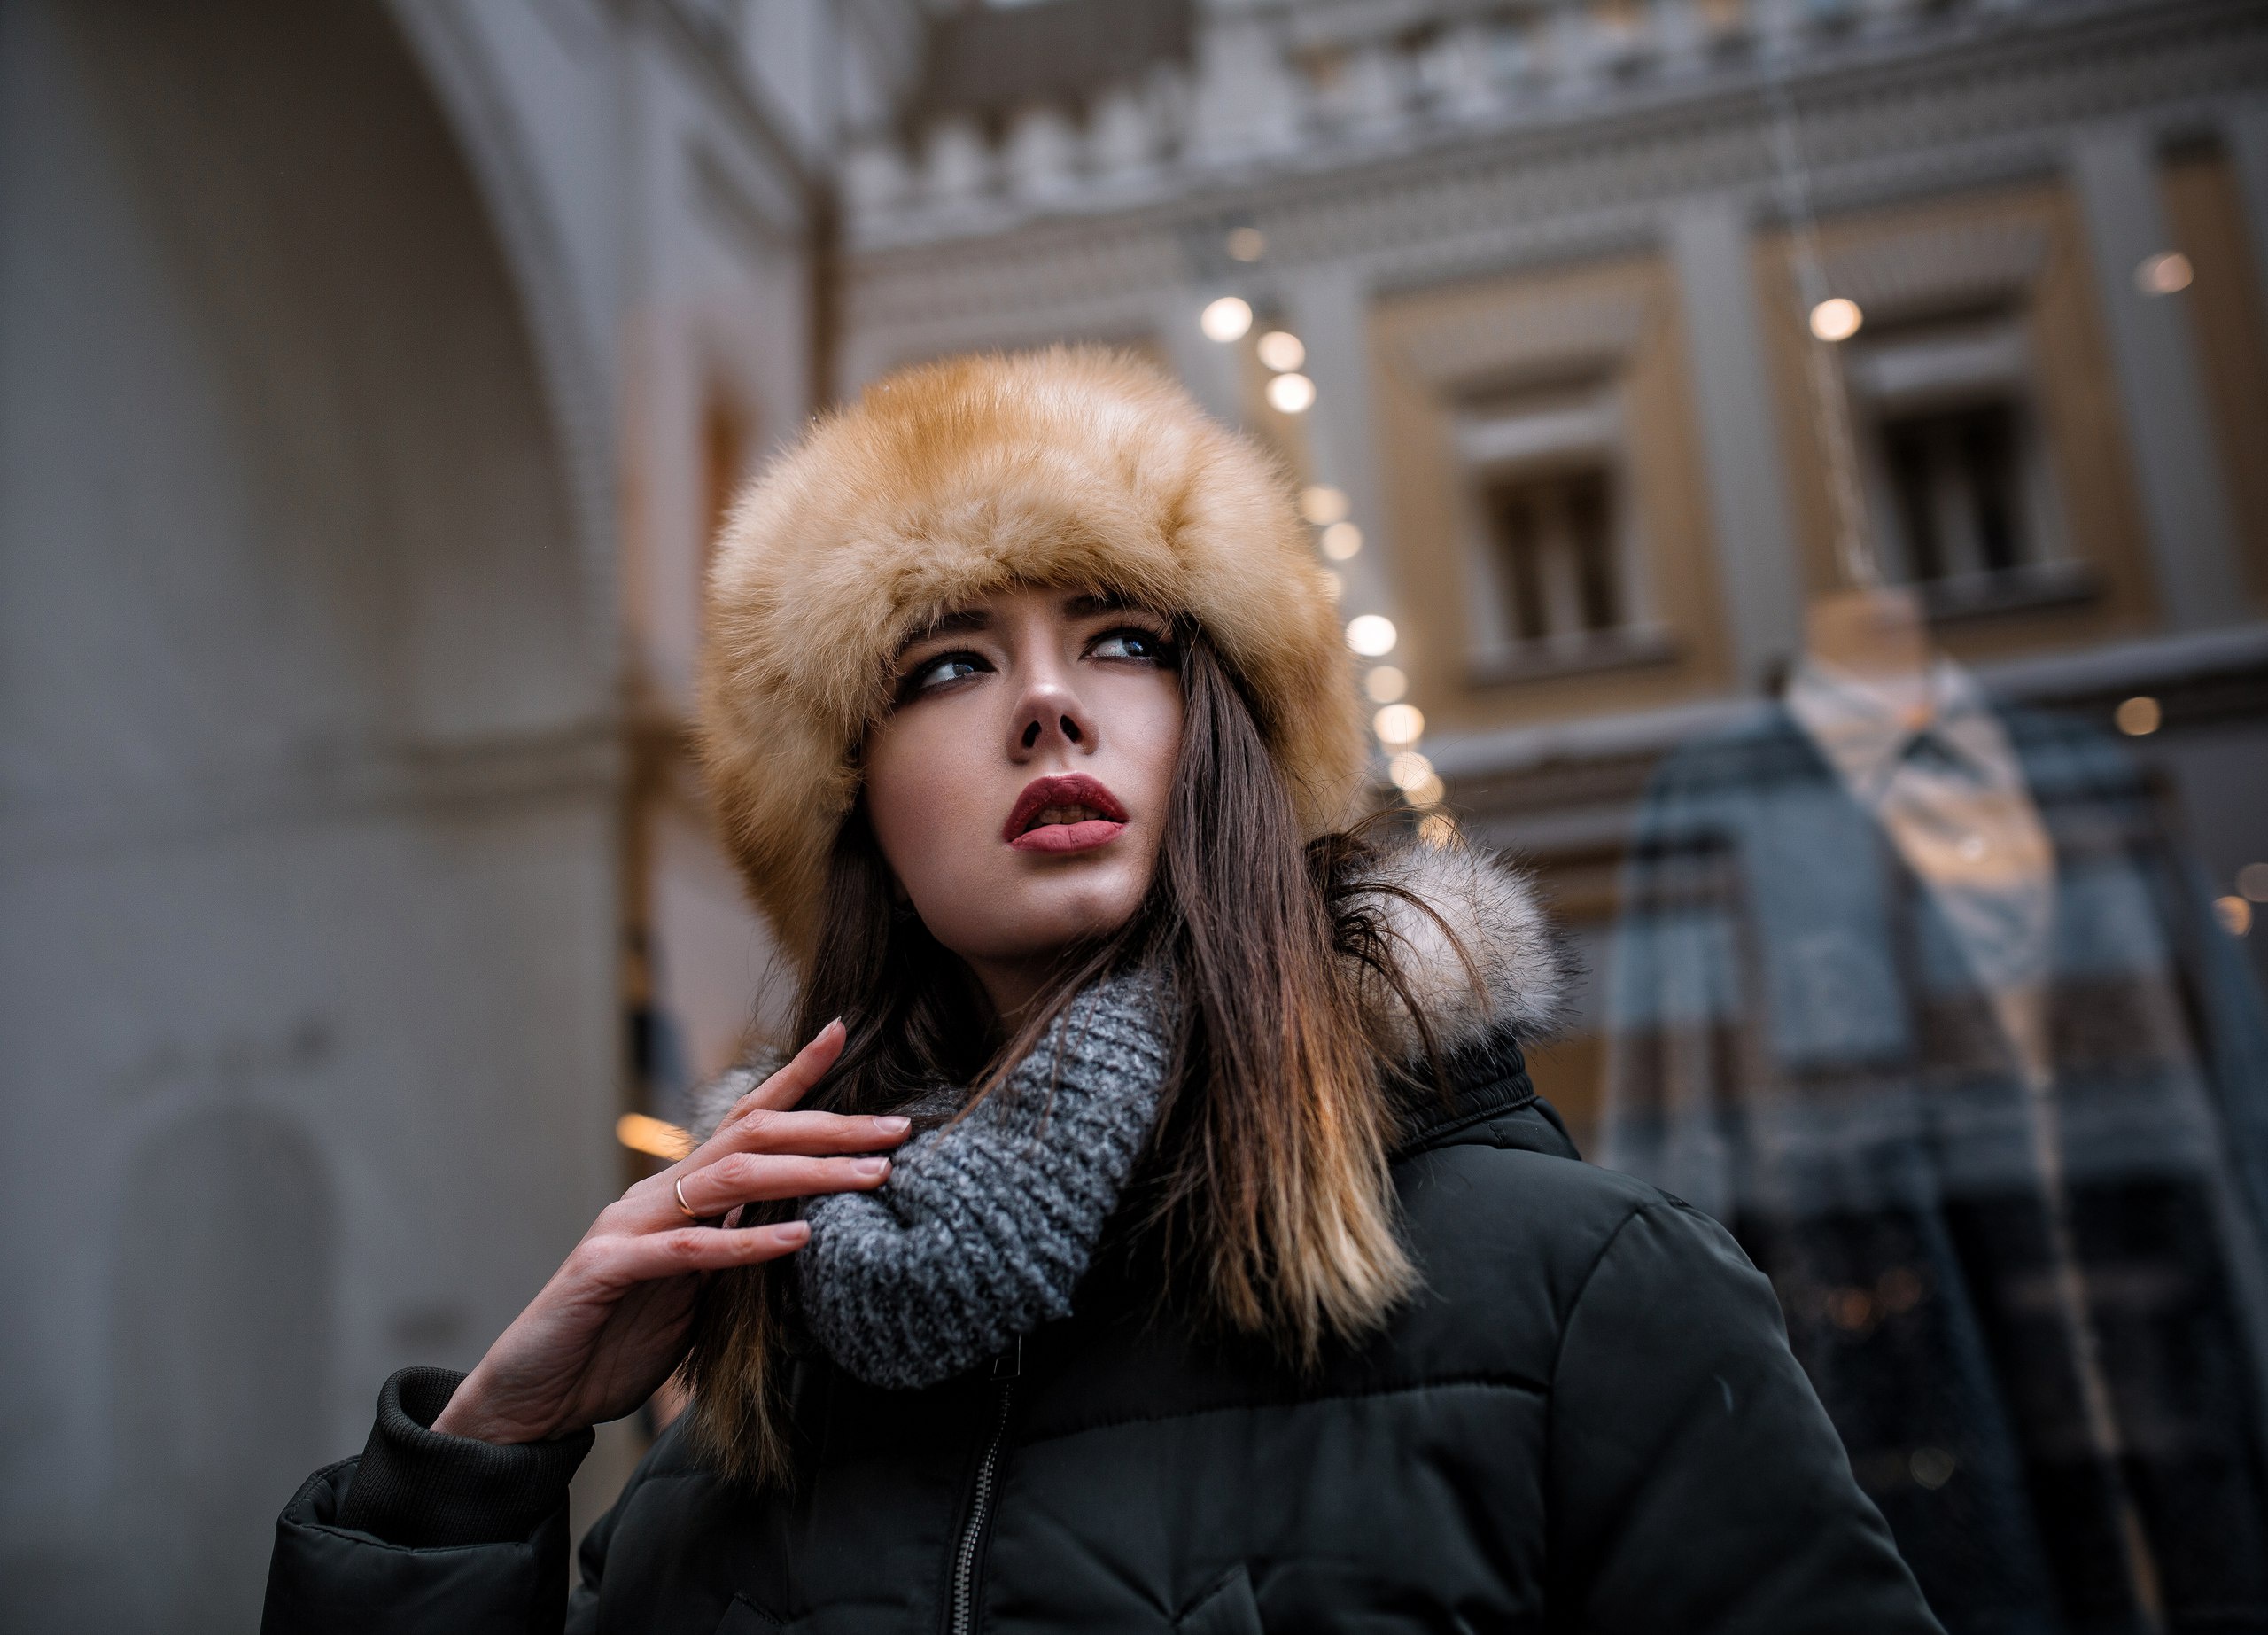 Urban Portrait Women Outdoors Women Fur Cap Black Jackets Touching Hair Looking Away 2560x1845